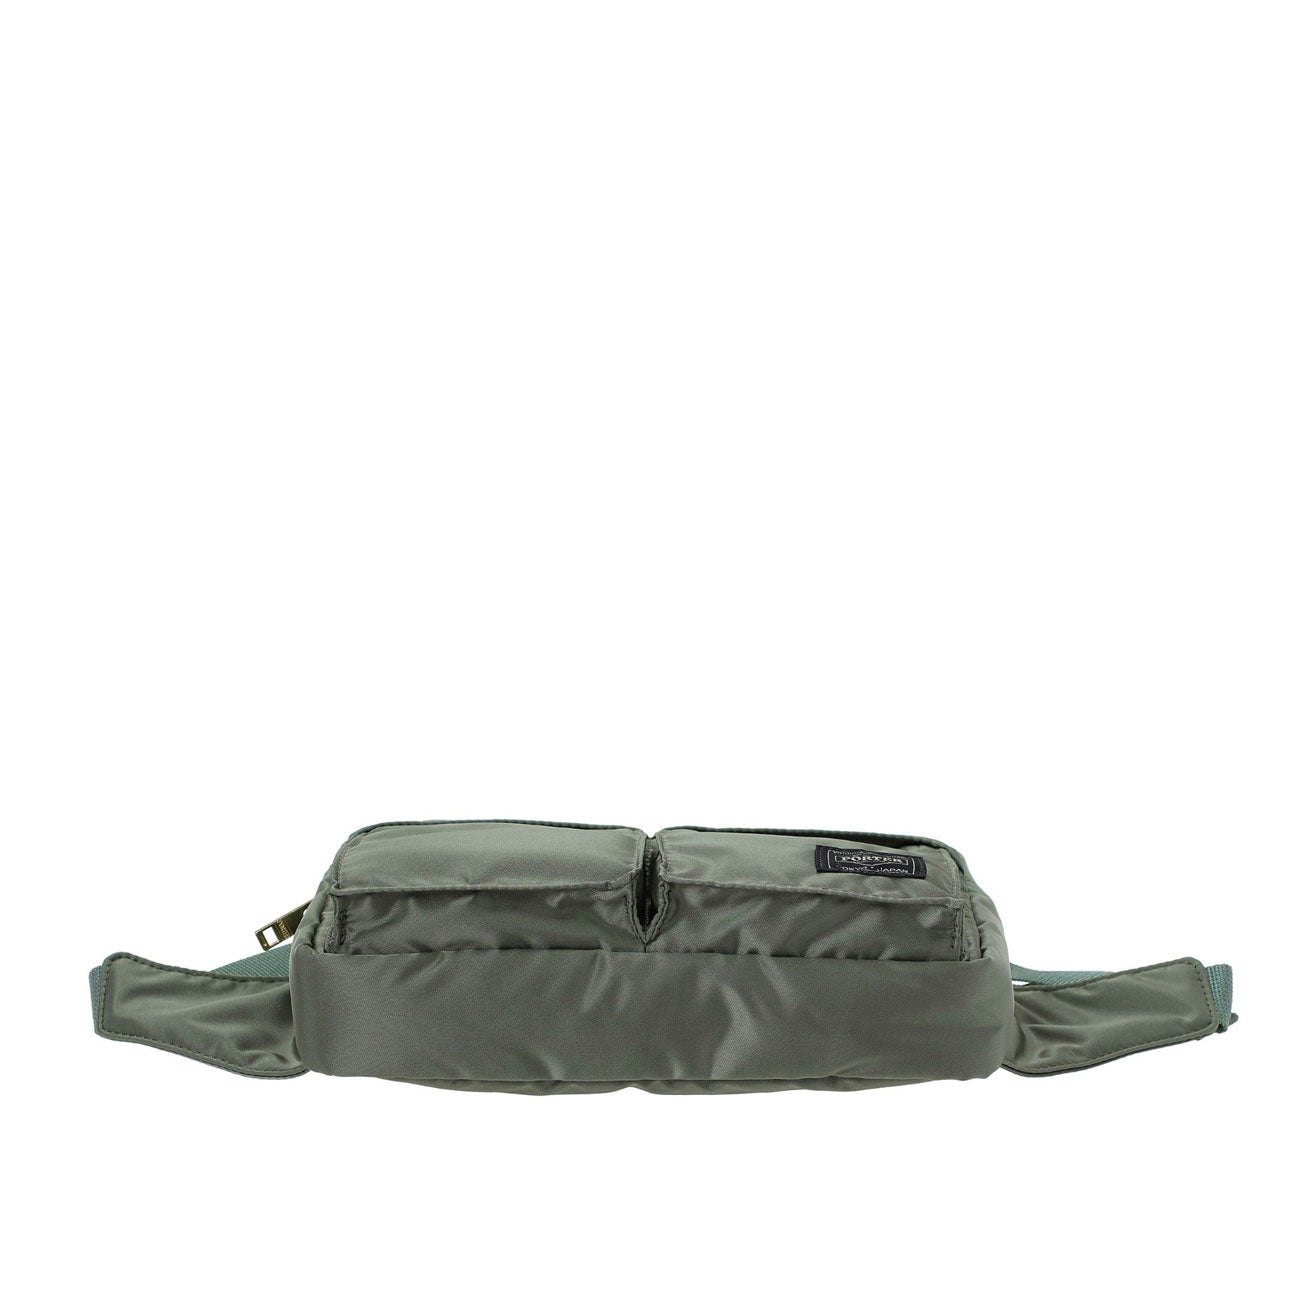 Porter-Yoshida & Co. Tanker Garment Bag Sage Green at